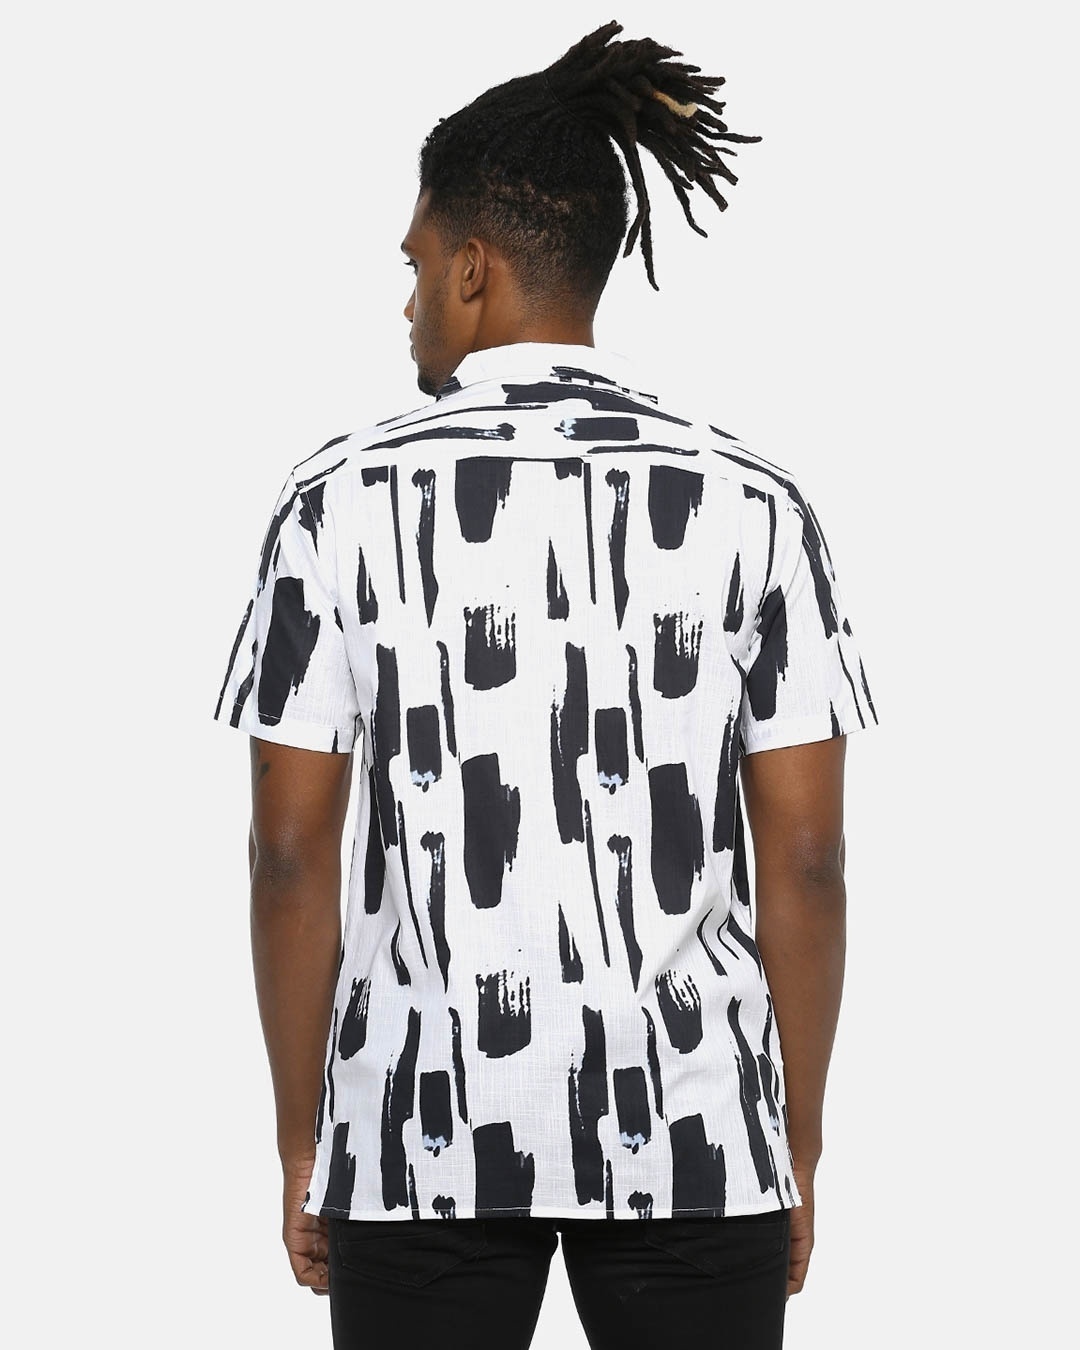 Shop Men's Stylish Casual Shirt-Design